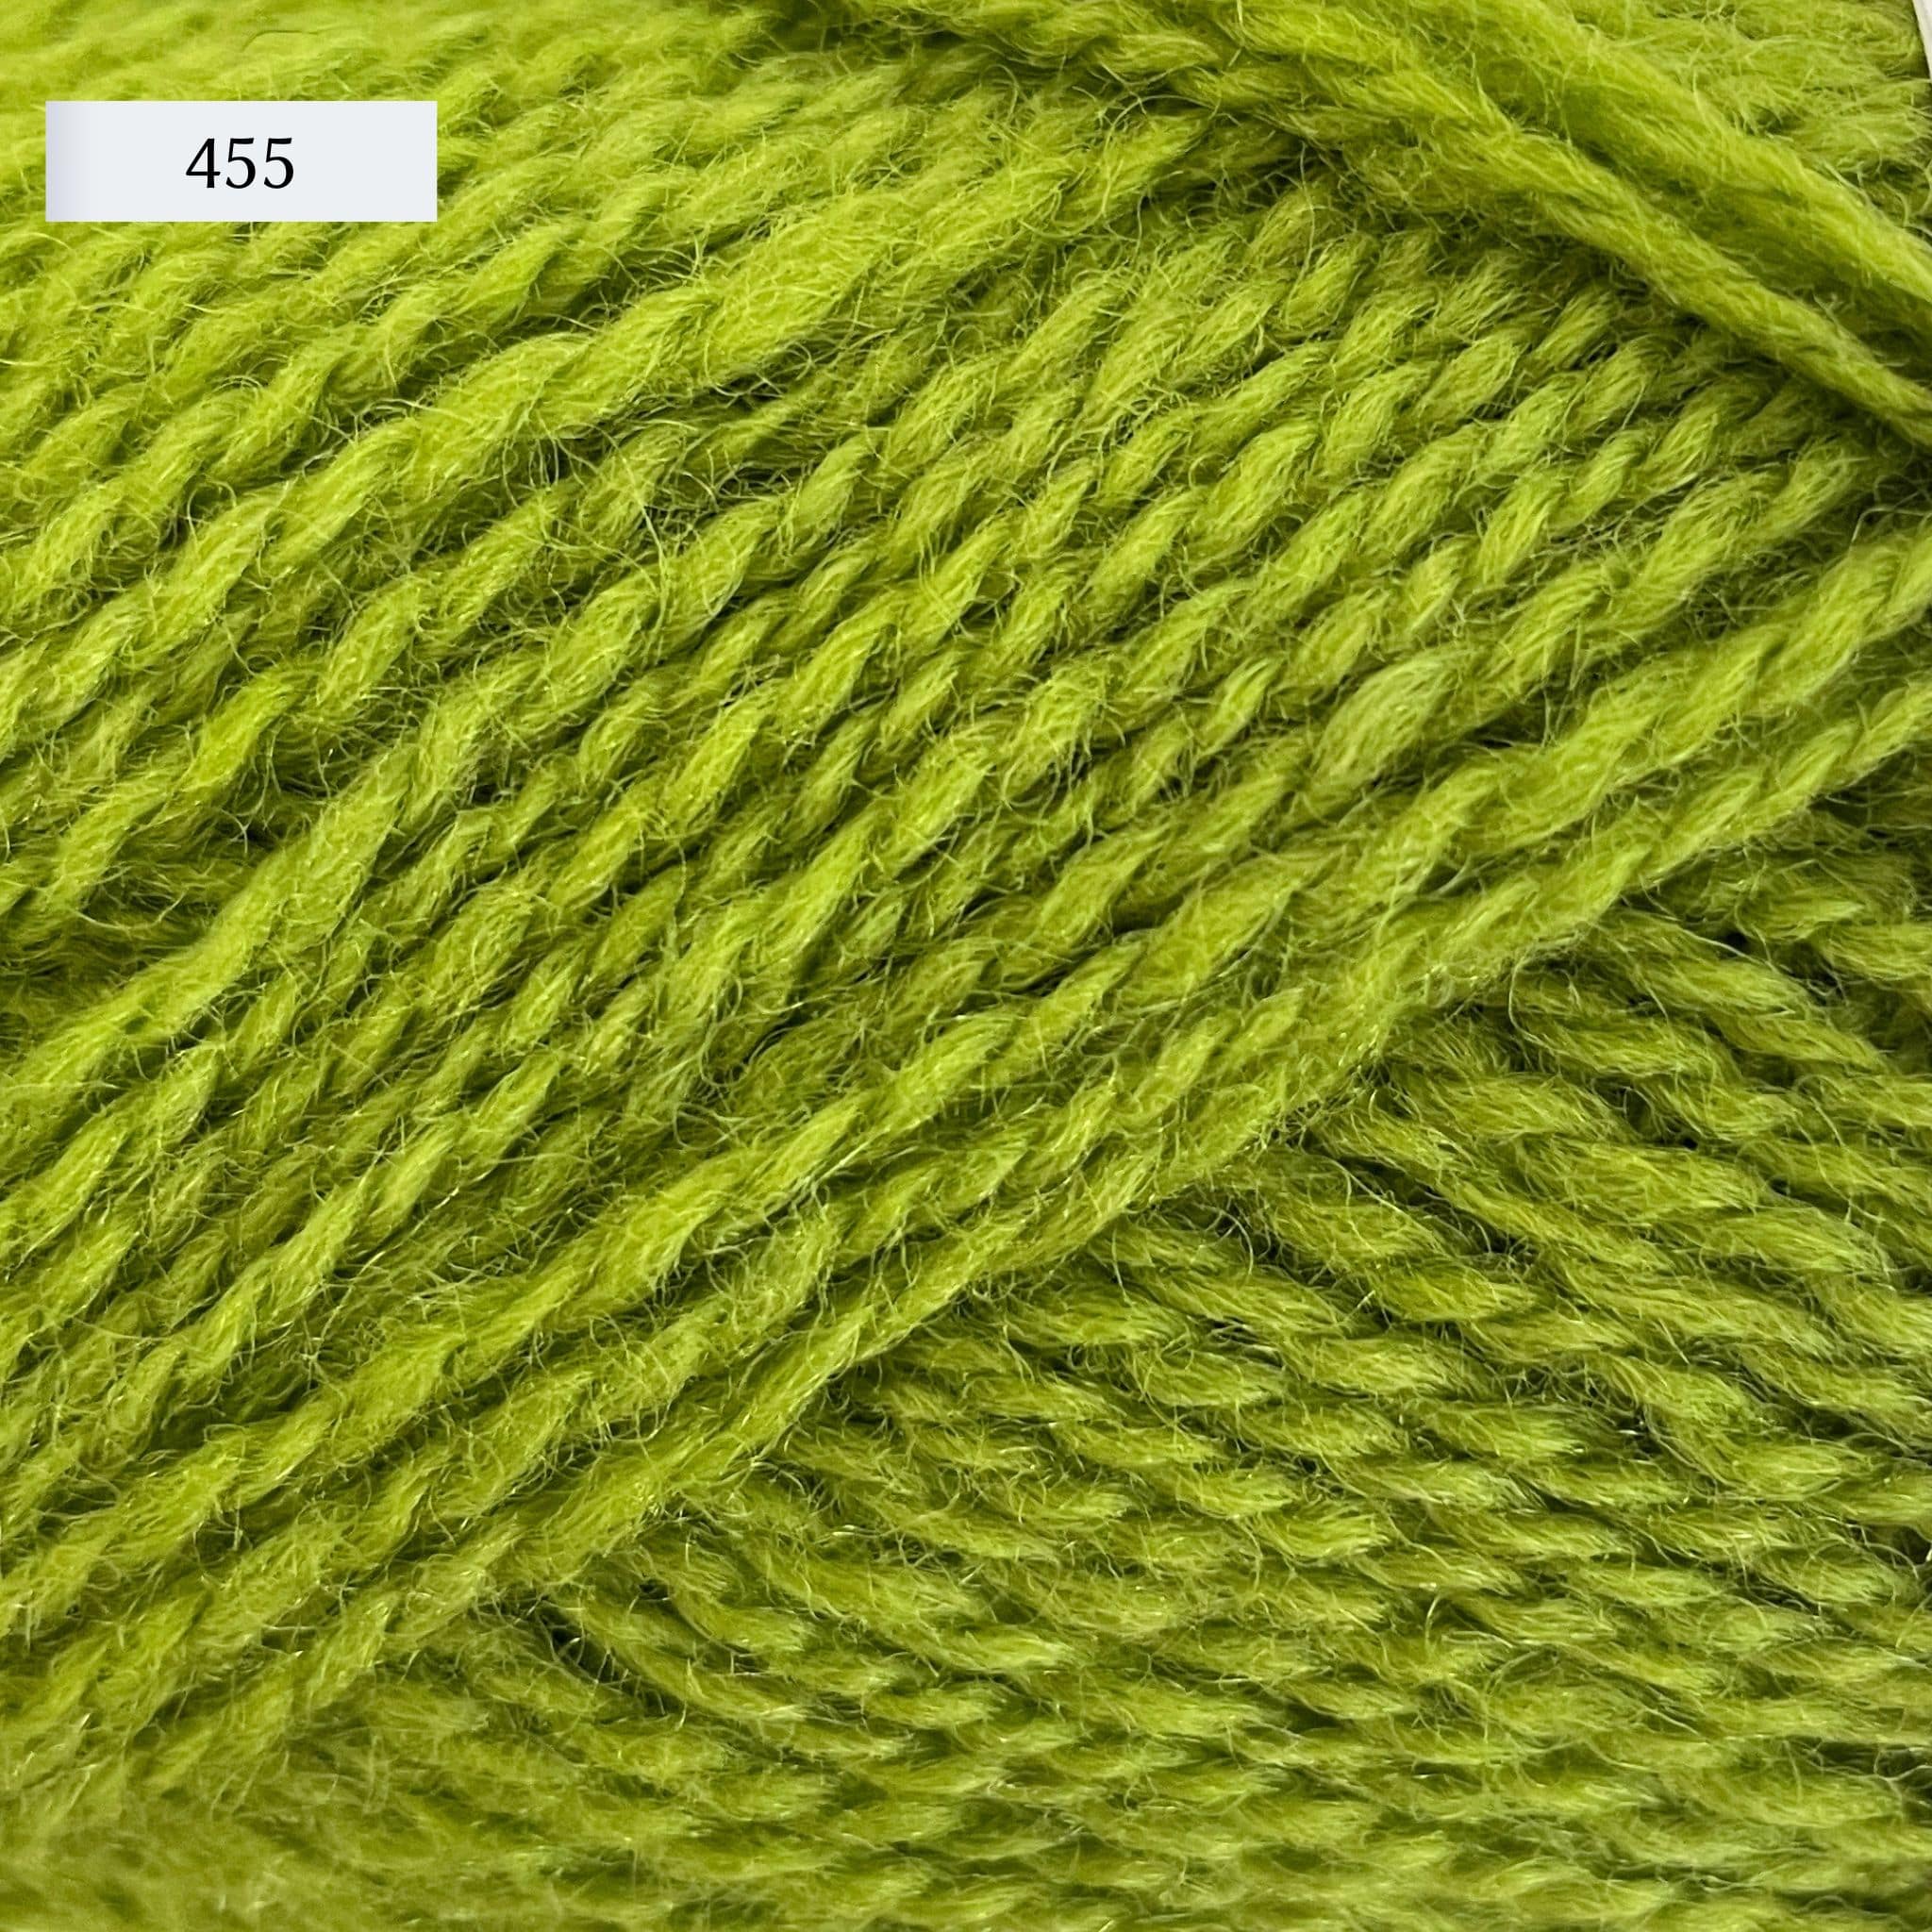 Rauma Finullgarn, a fingering/sport weight yarn, in color 455, a bright grass green